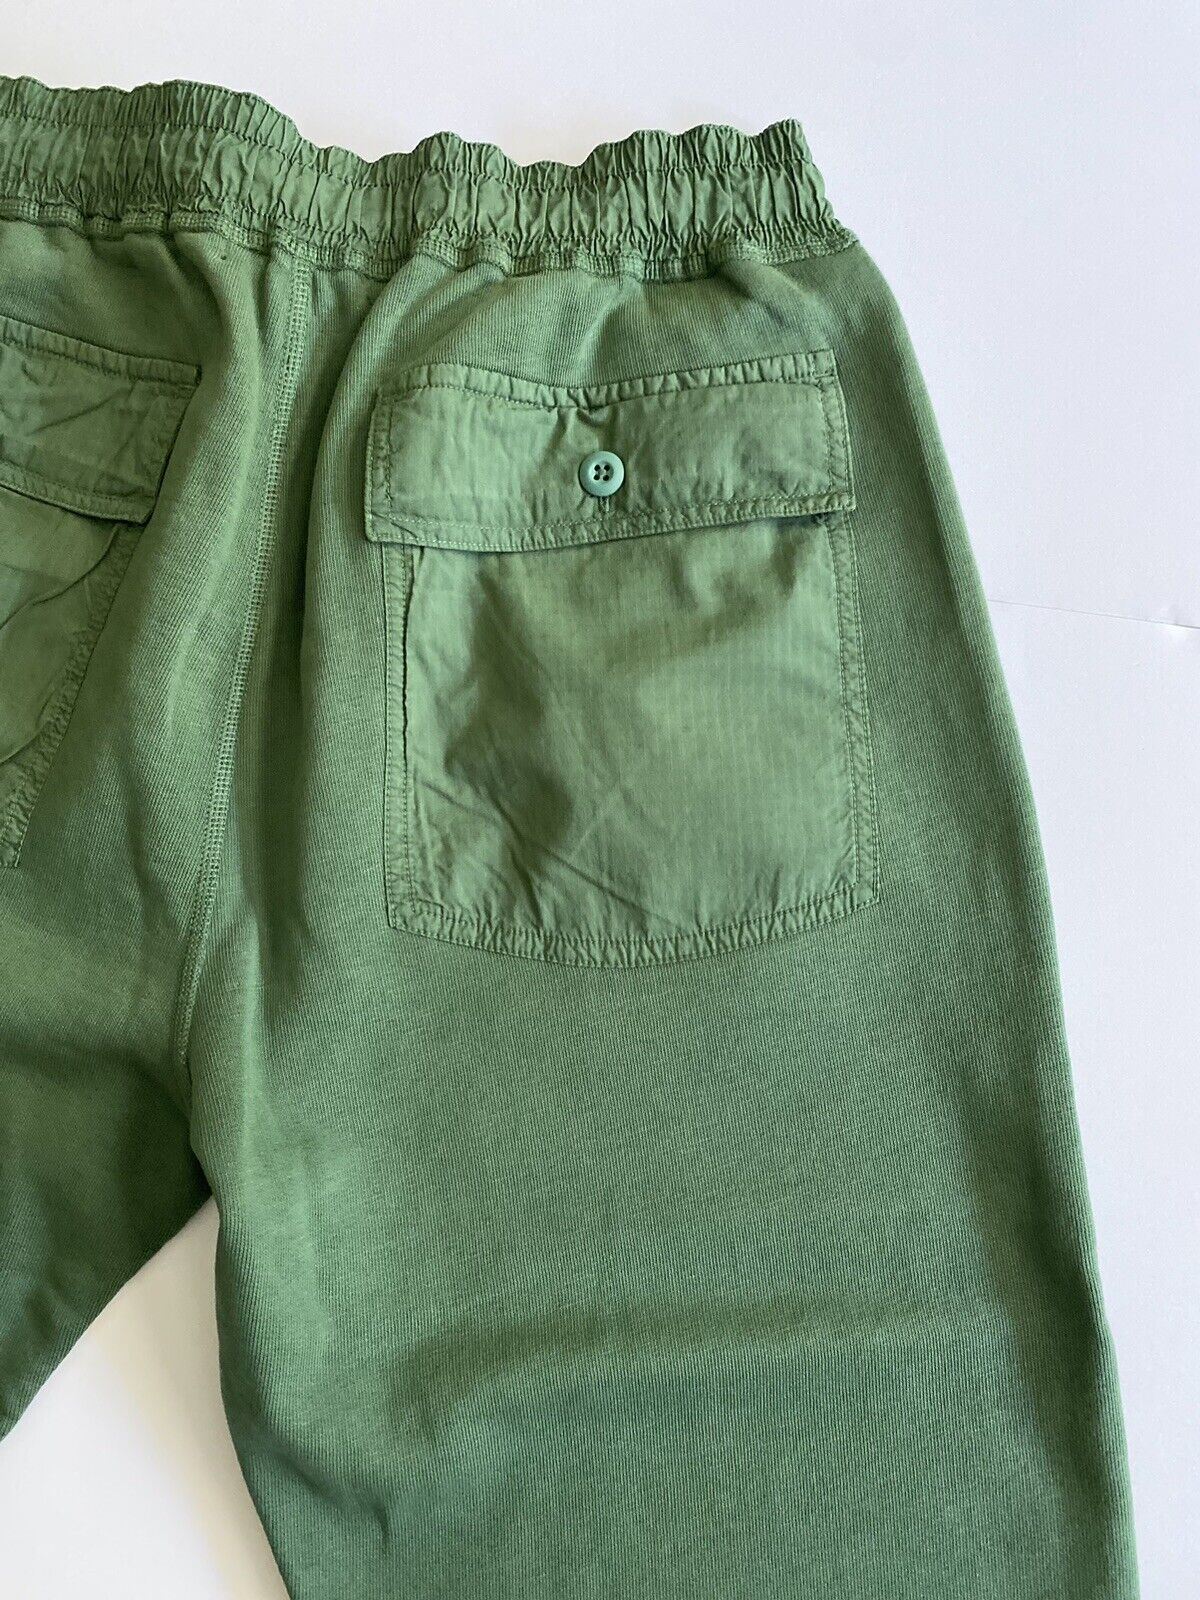 Neu mit Etikett: 168 $ Polo Ralph Lauren Herren-Freizeithose „Modern Green“ XL